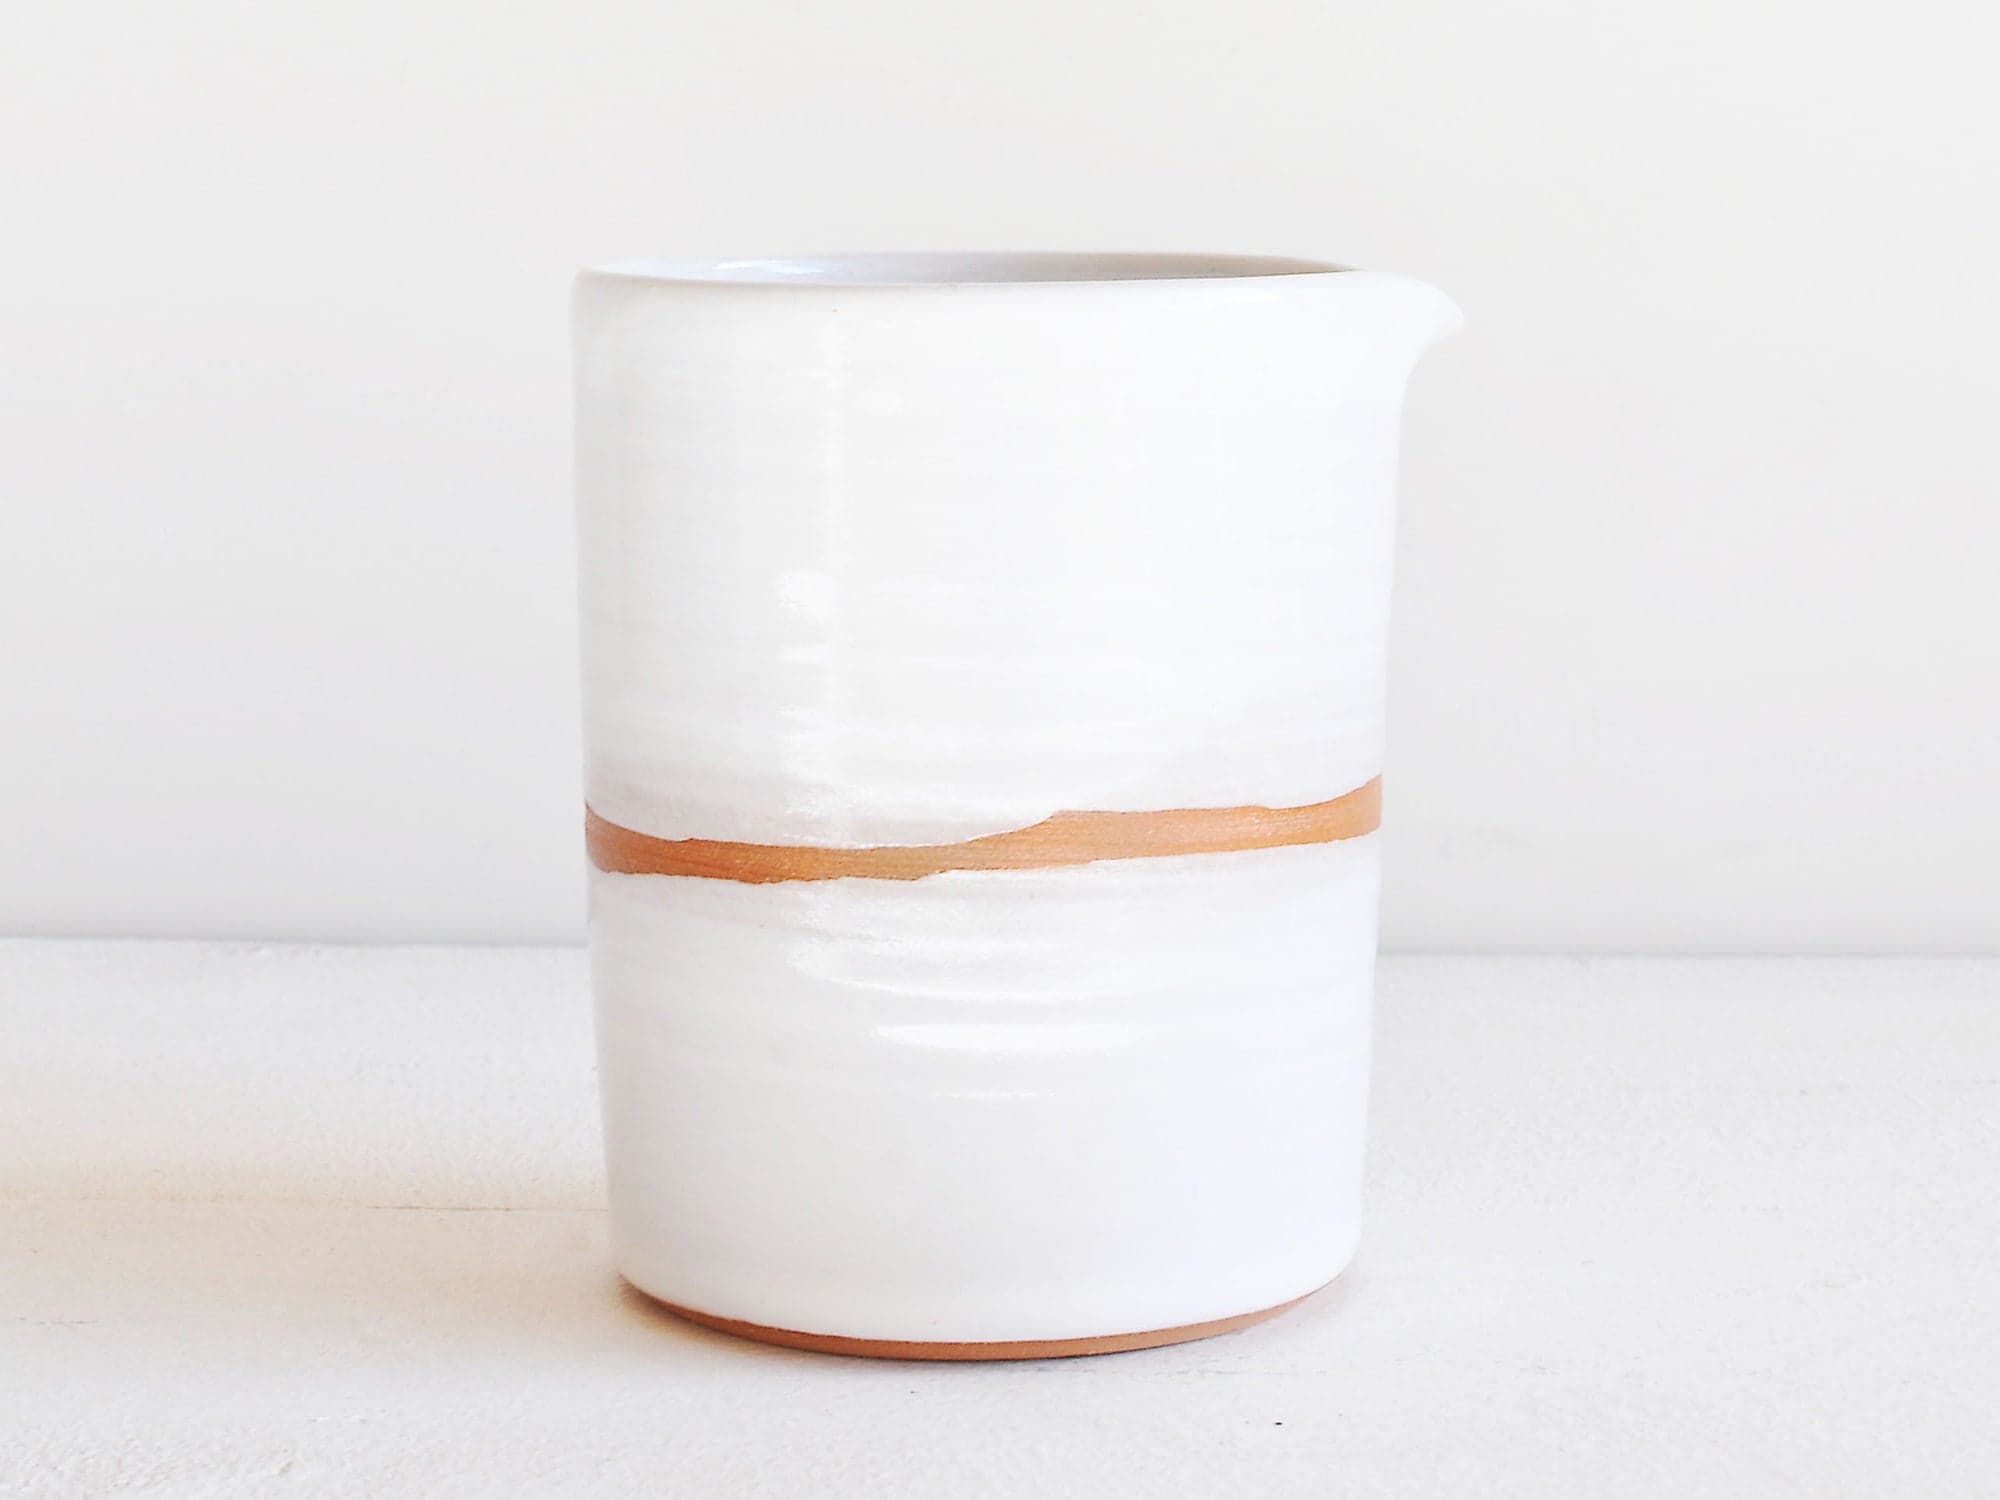 Handmade organic-shaped natural ceramic pitcher